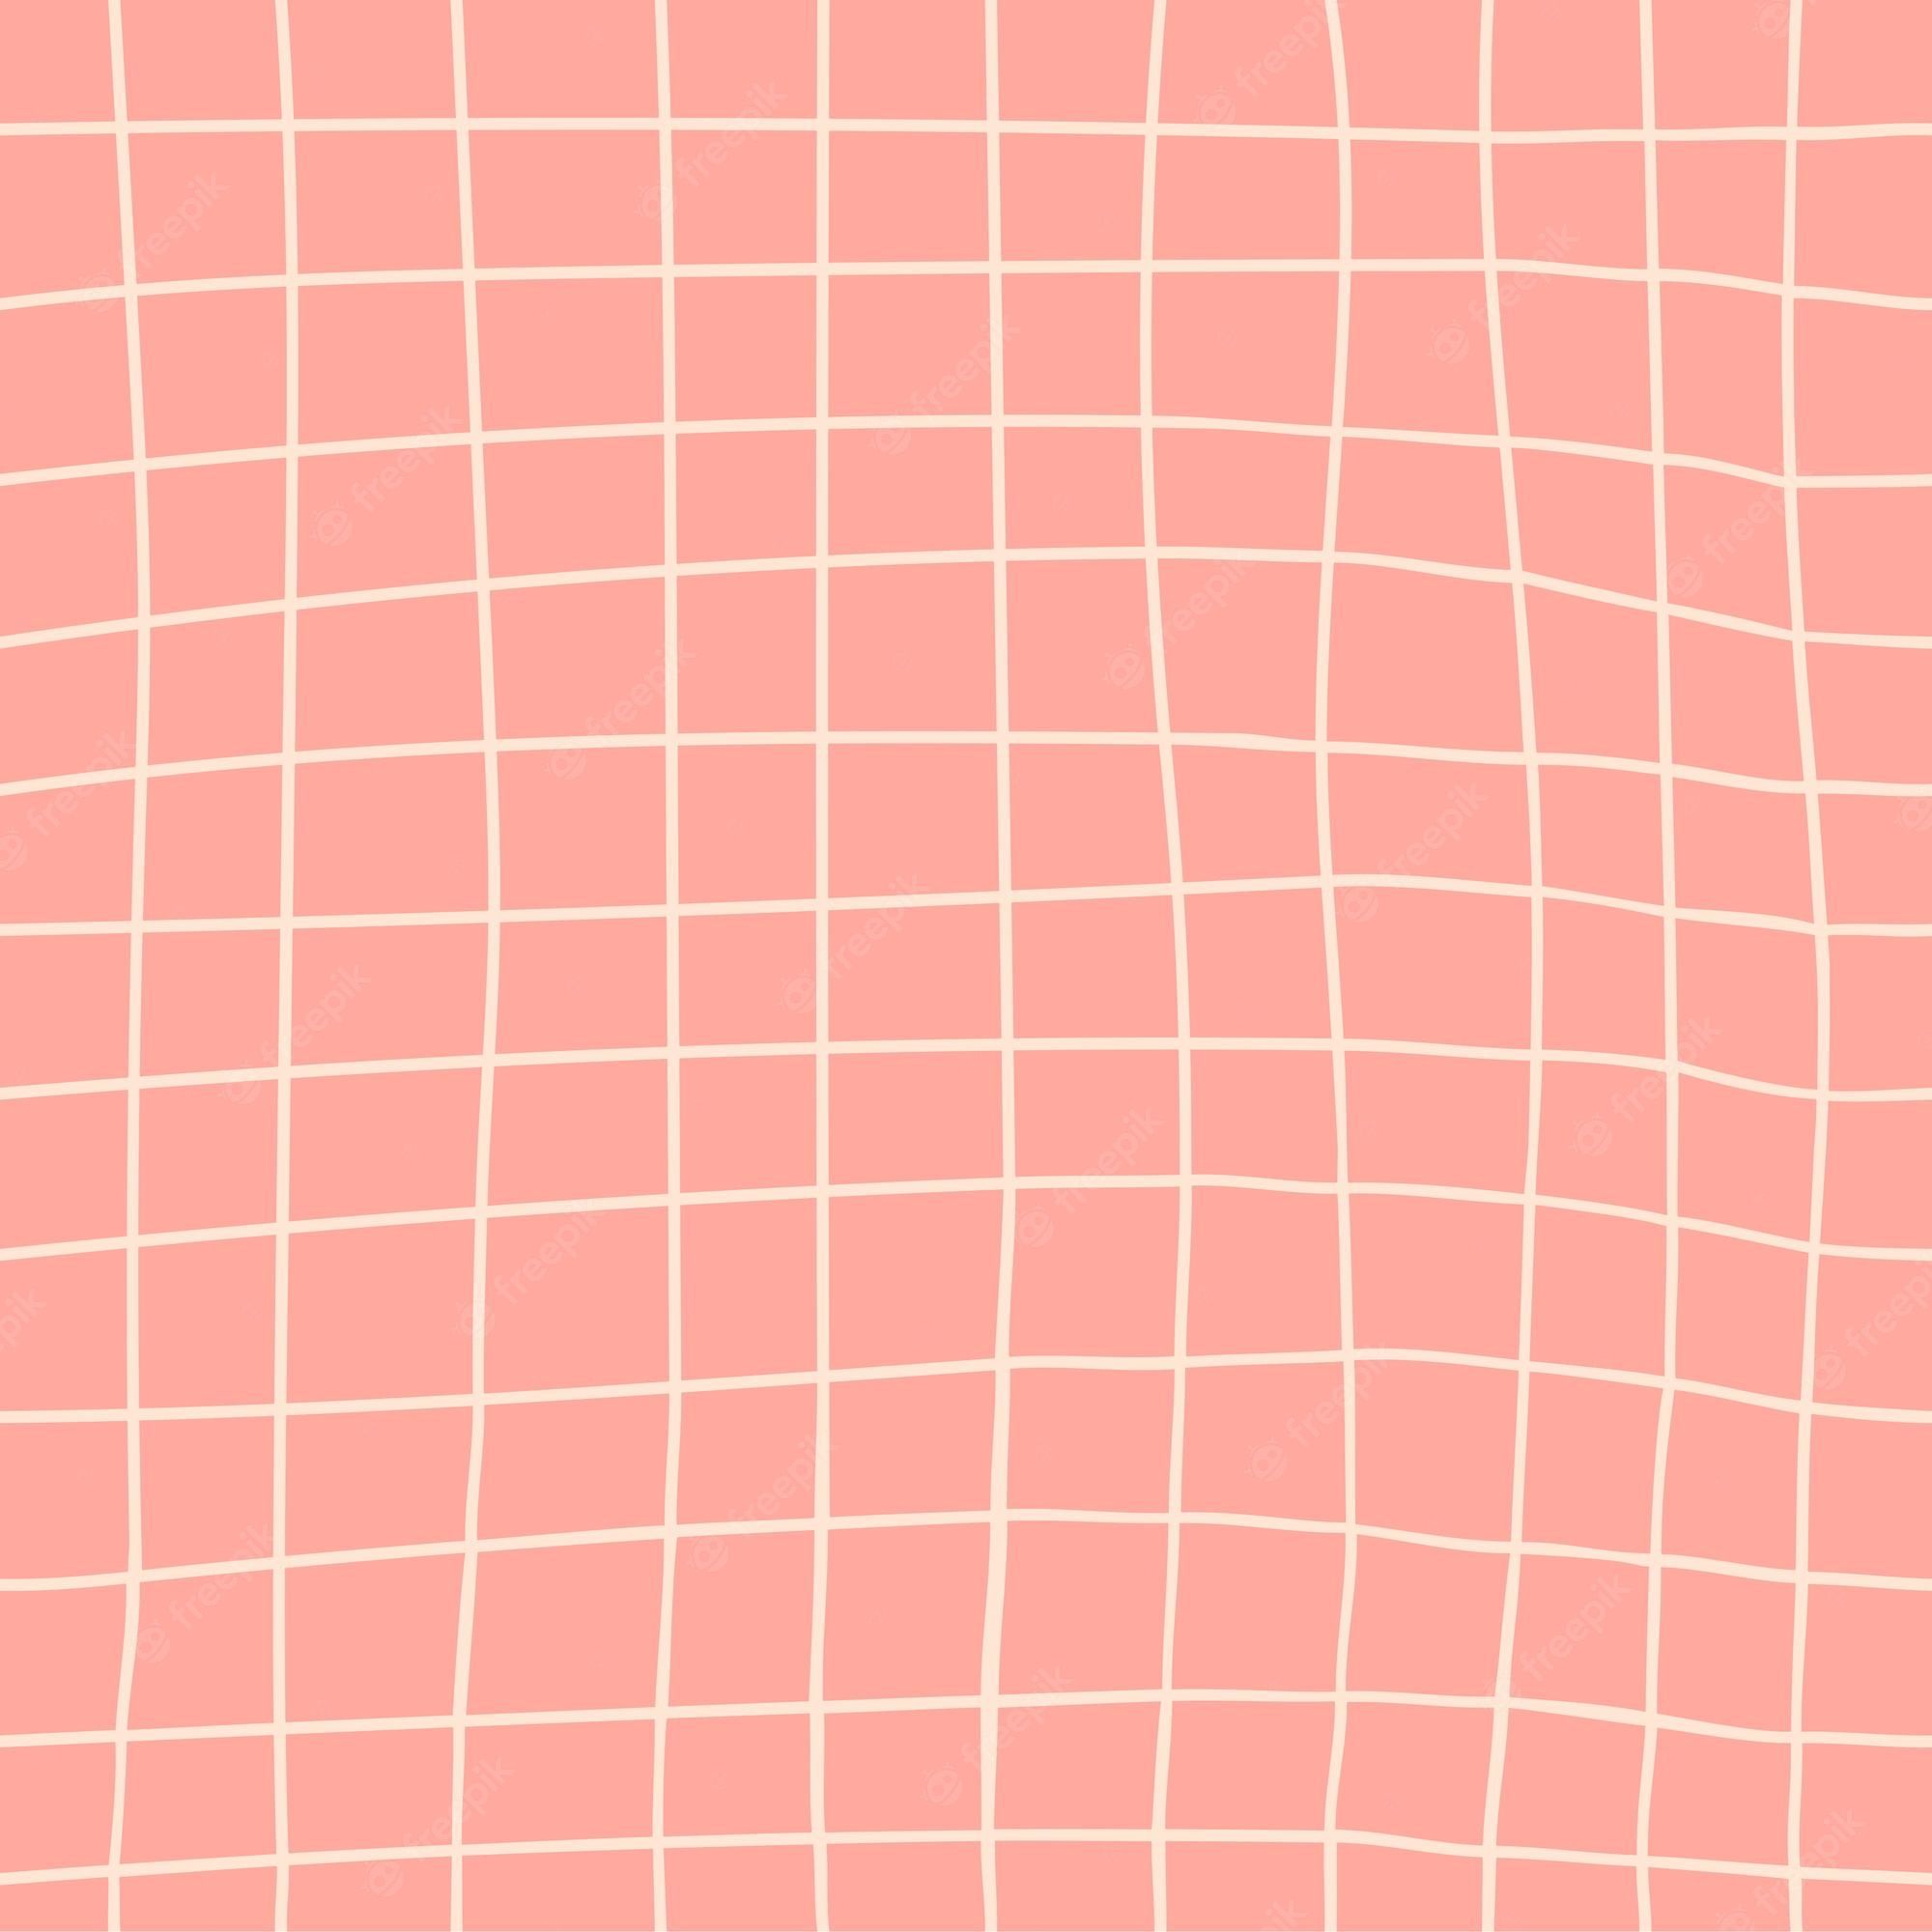 A pink grid pattern on an orange background - Grid